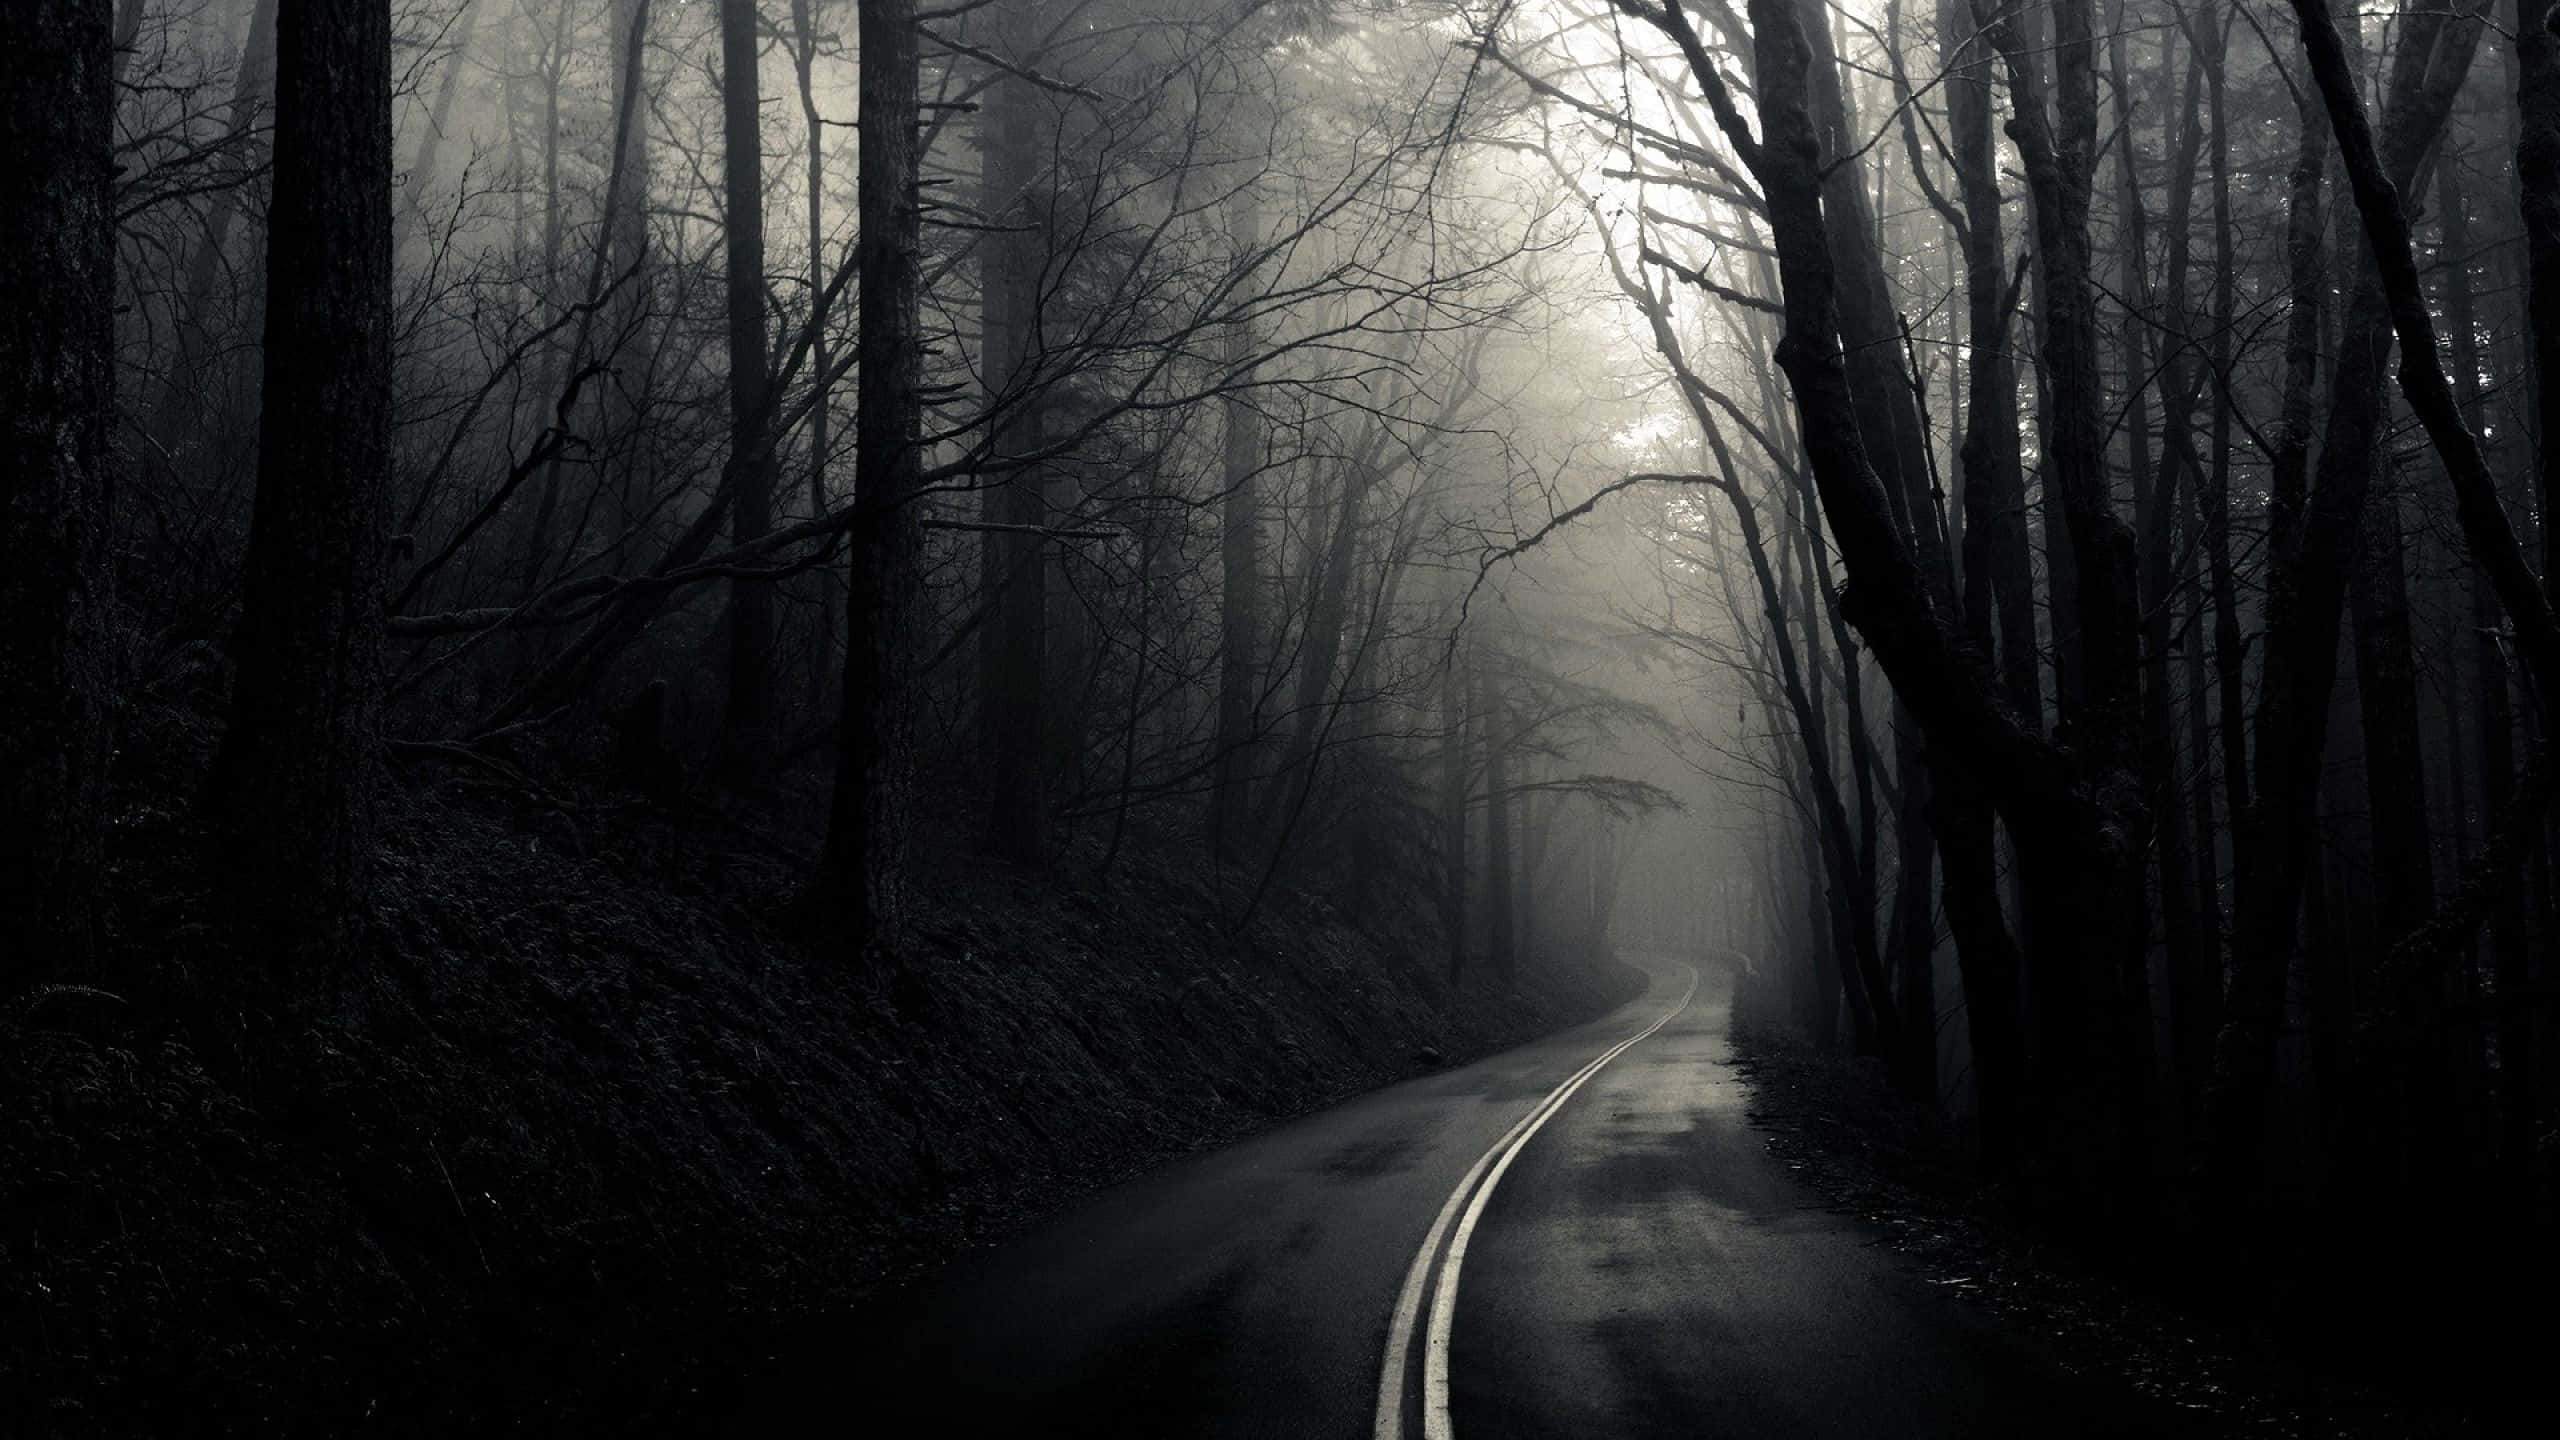 Foggy Forests Evoke A Dark And Depressing Mood